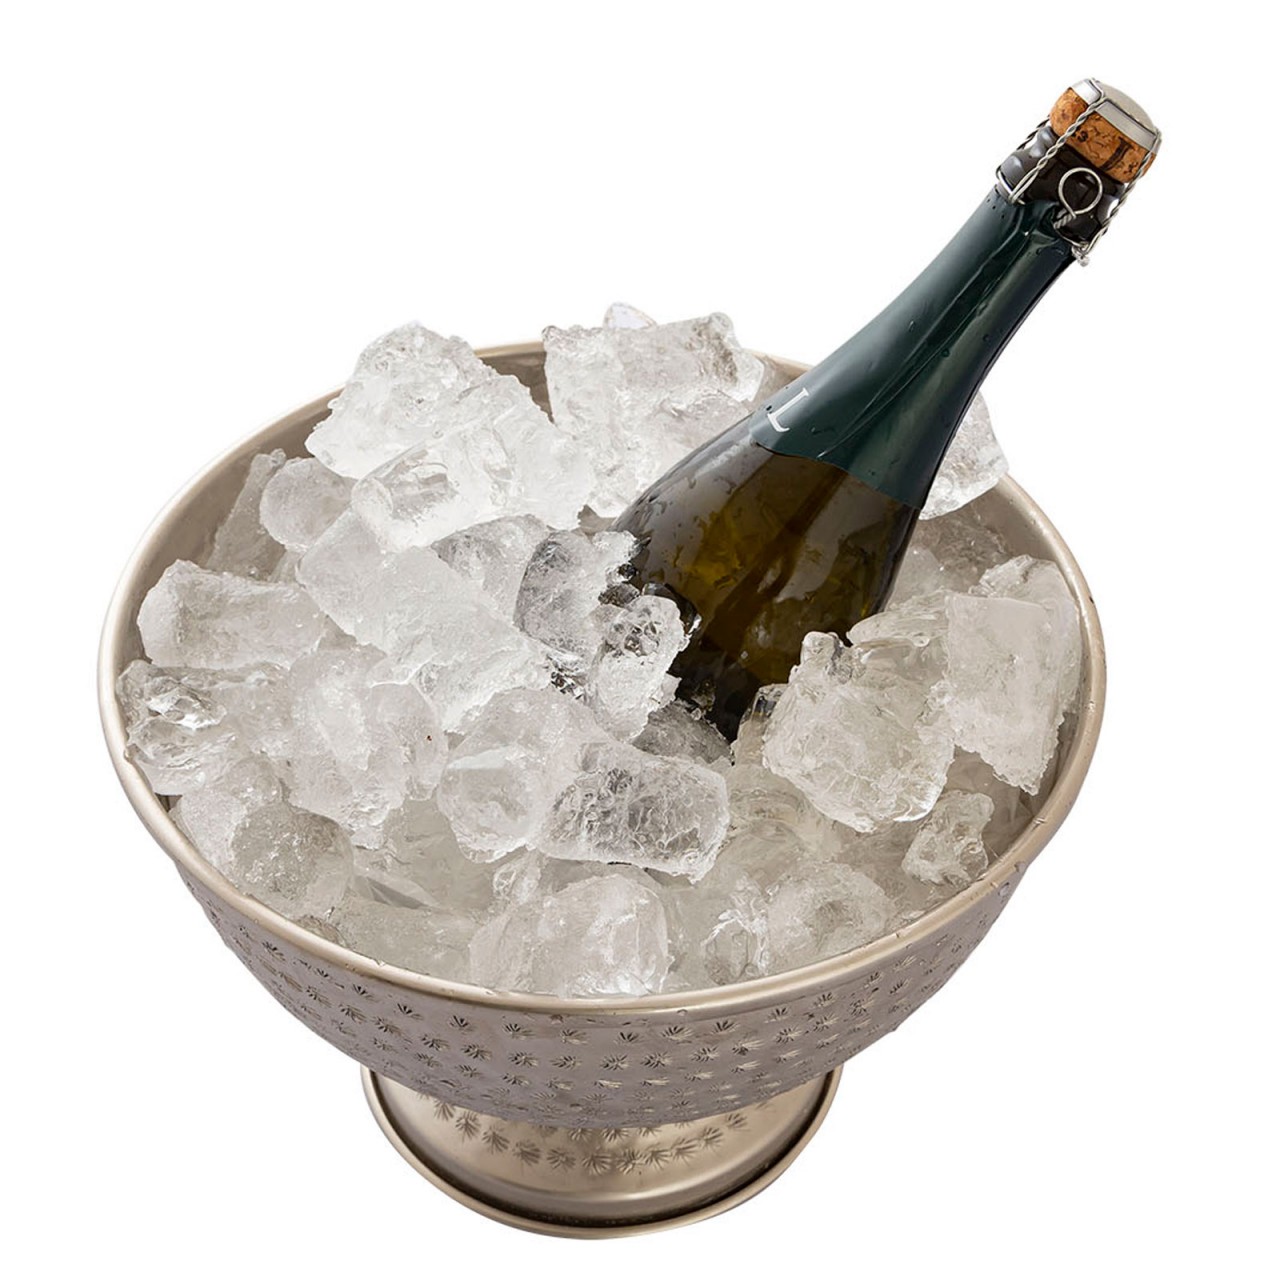 Flaschenkühler Weinkühler 4-teilig Metall ø 29 cm Sektkühler rund silber gold Eiskühler Champagner